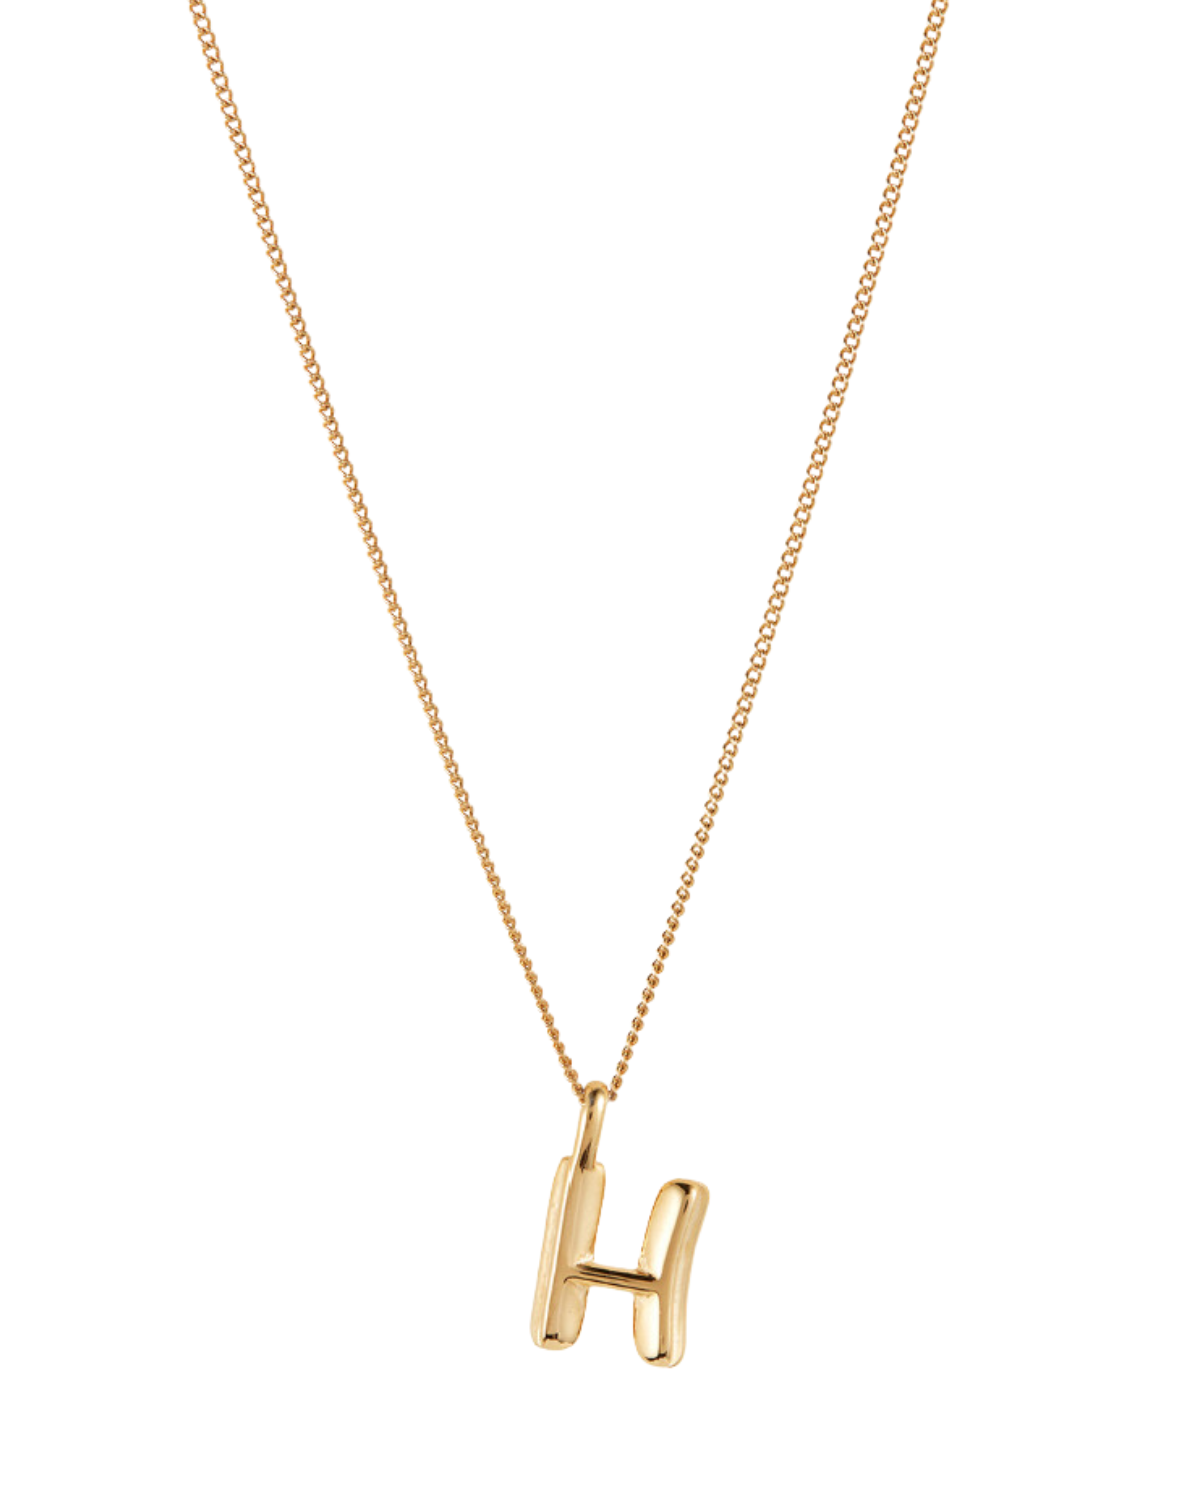 Monogram Necklace - H (Gold)